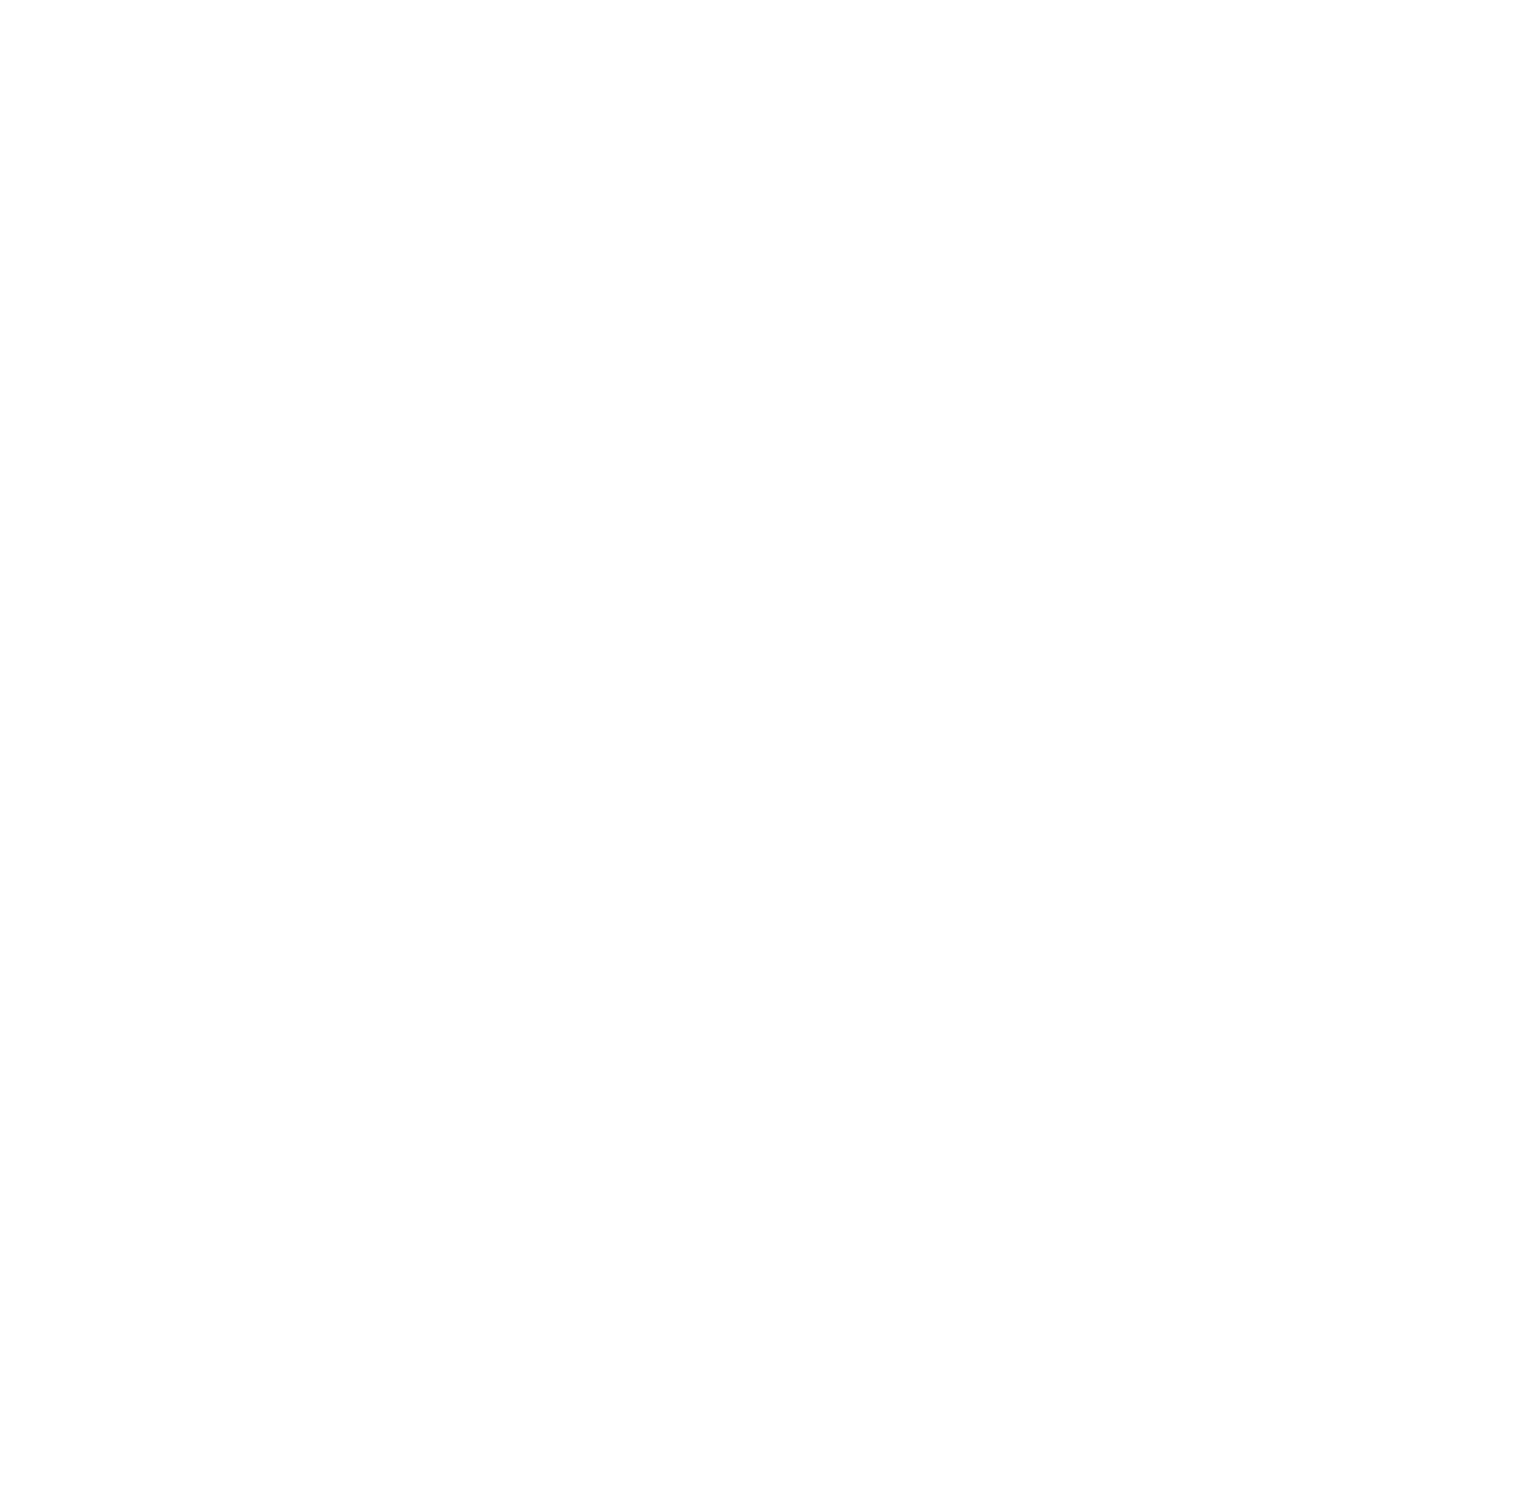 Skillsoft logo pour fonds sombres (PNG transparent)